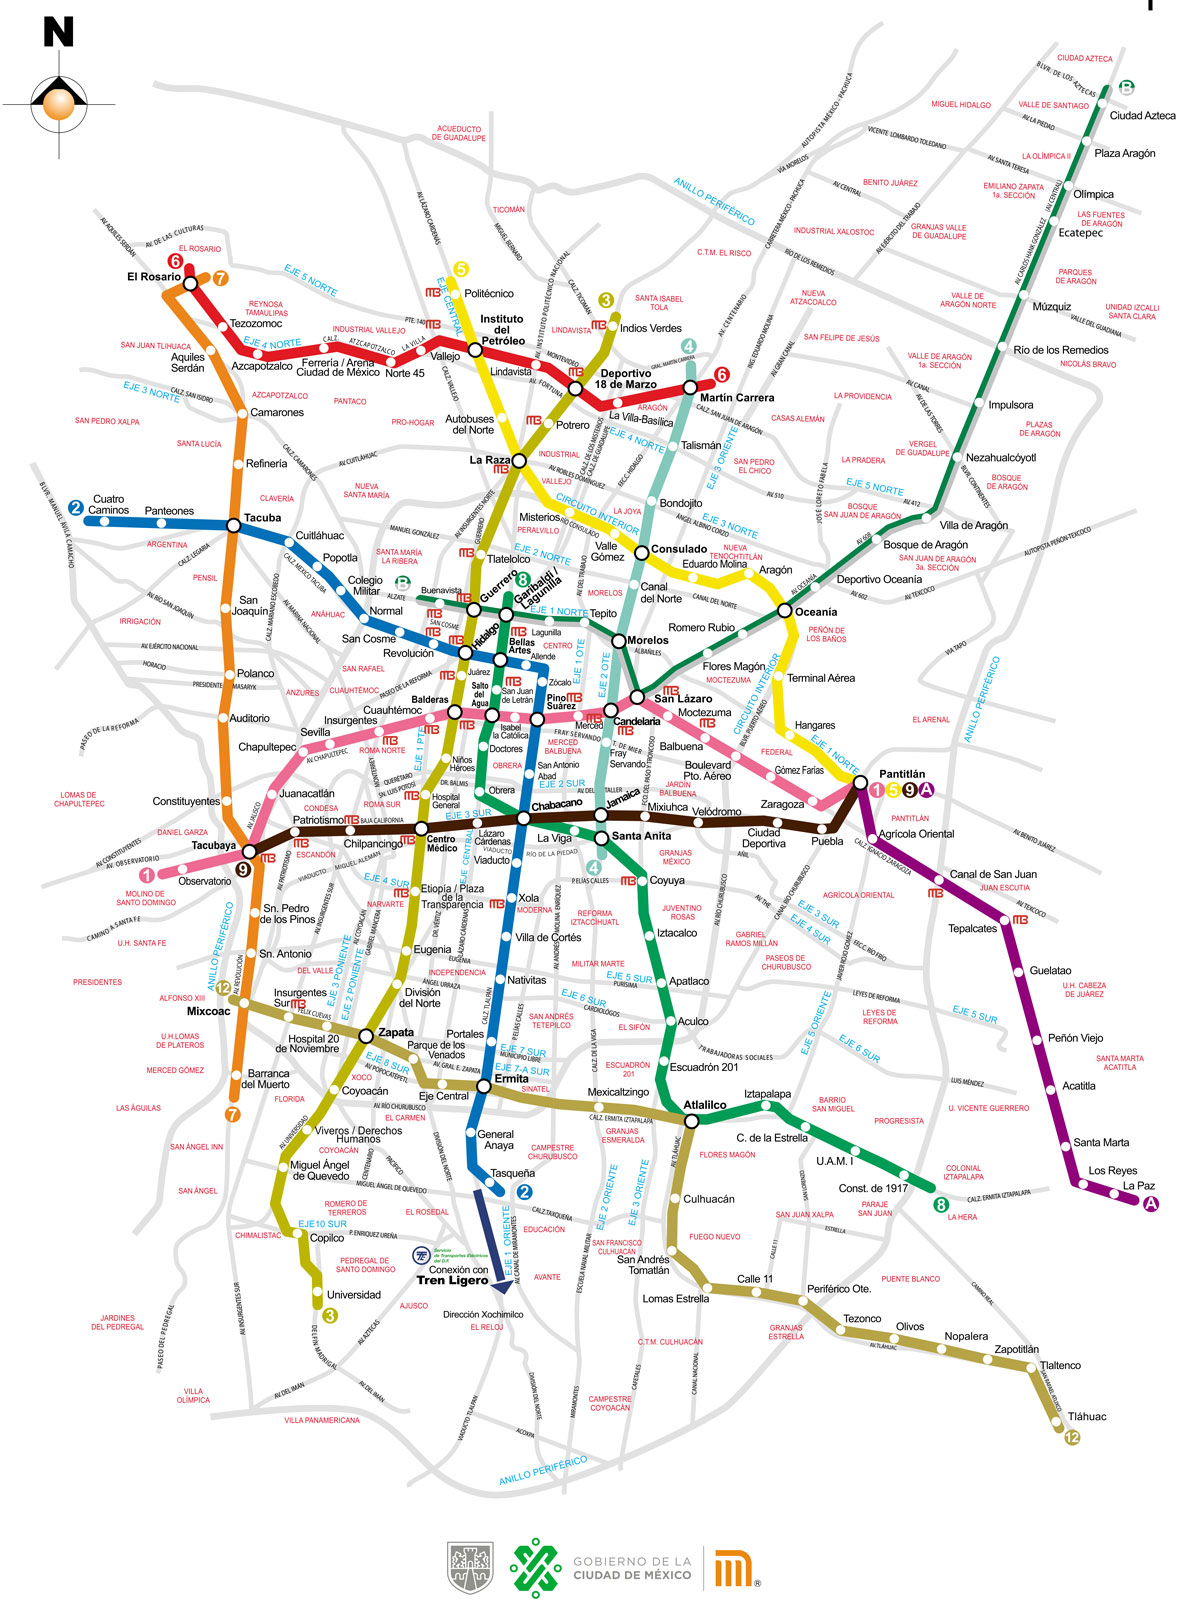 The Mexico City Metro System